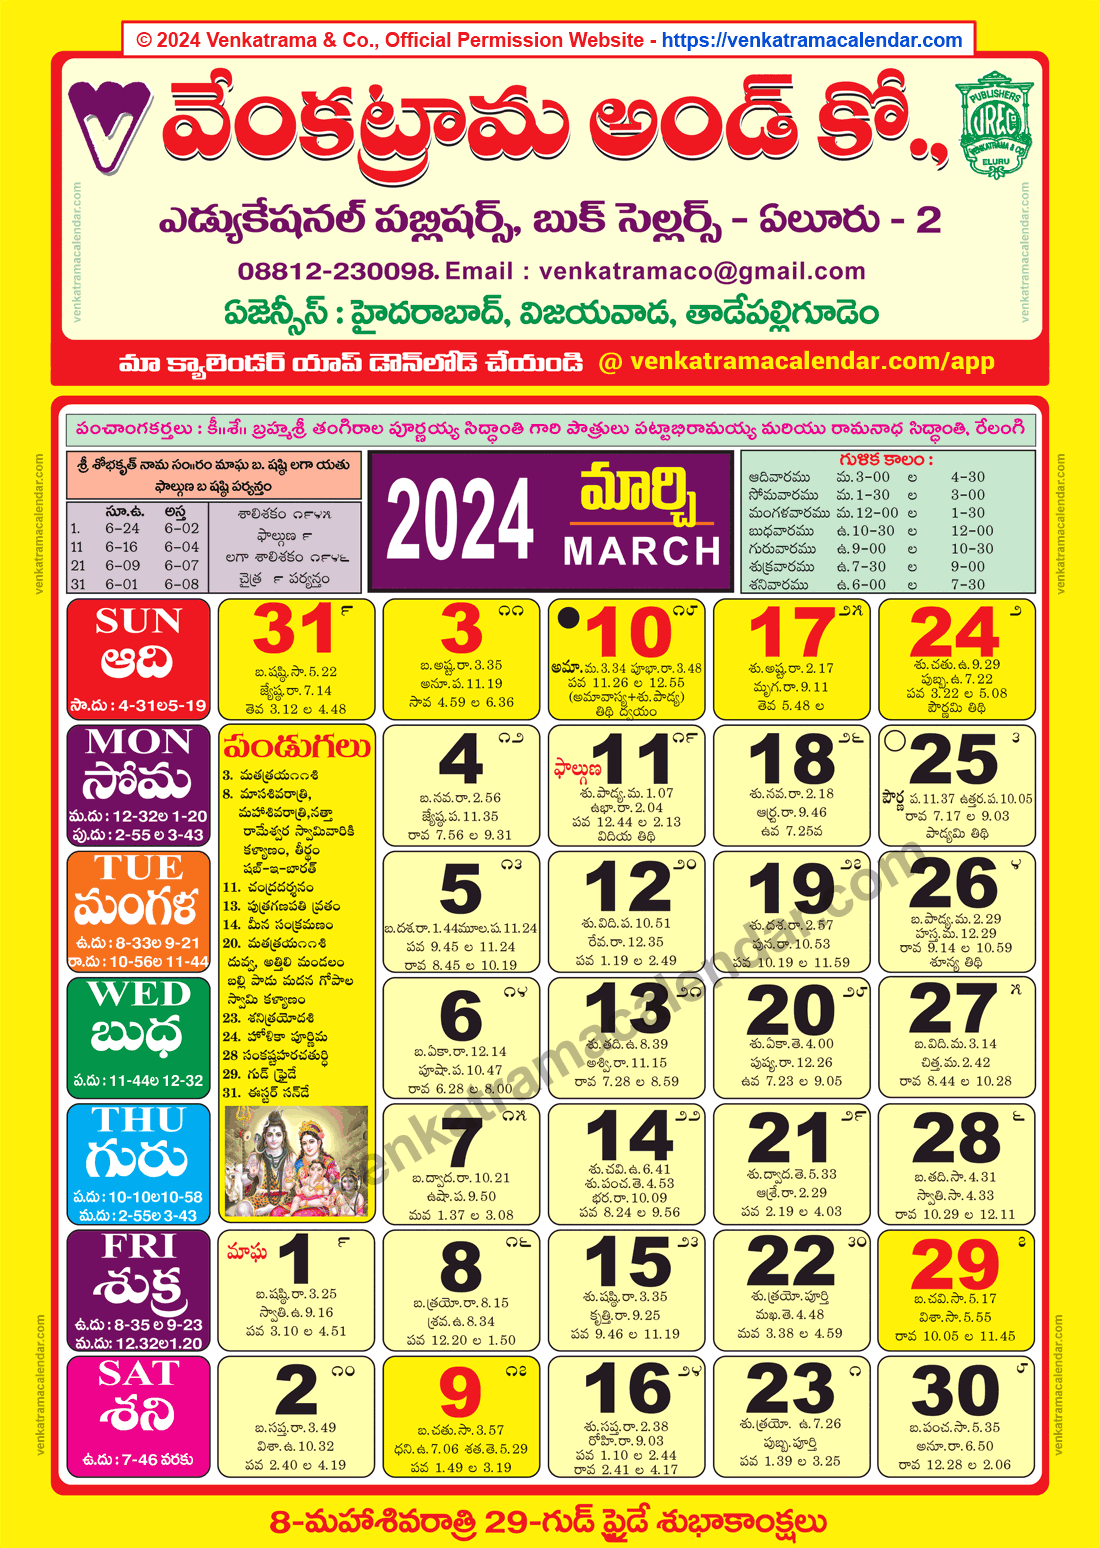 Venkatrama Calendar 2024 March